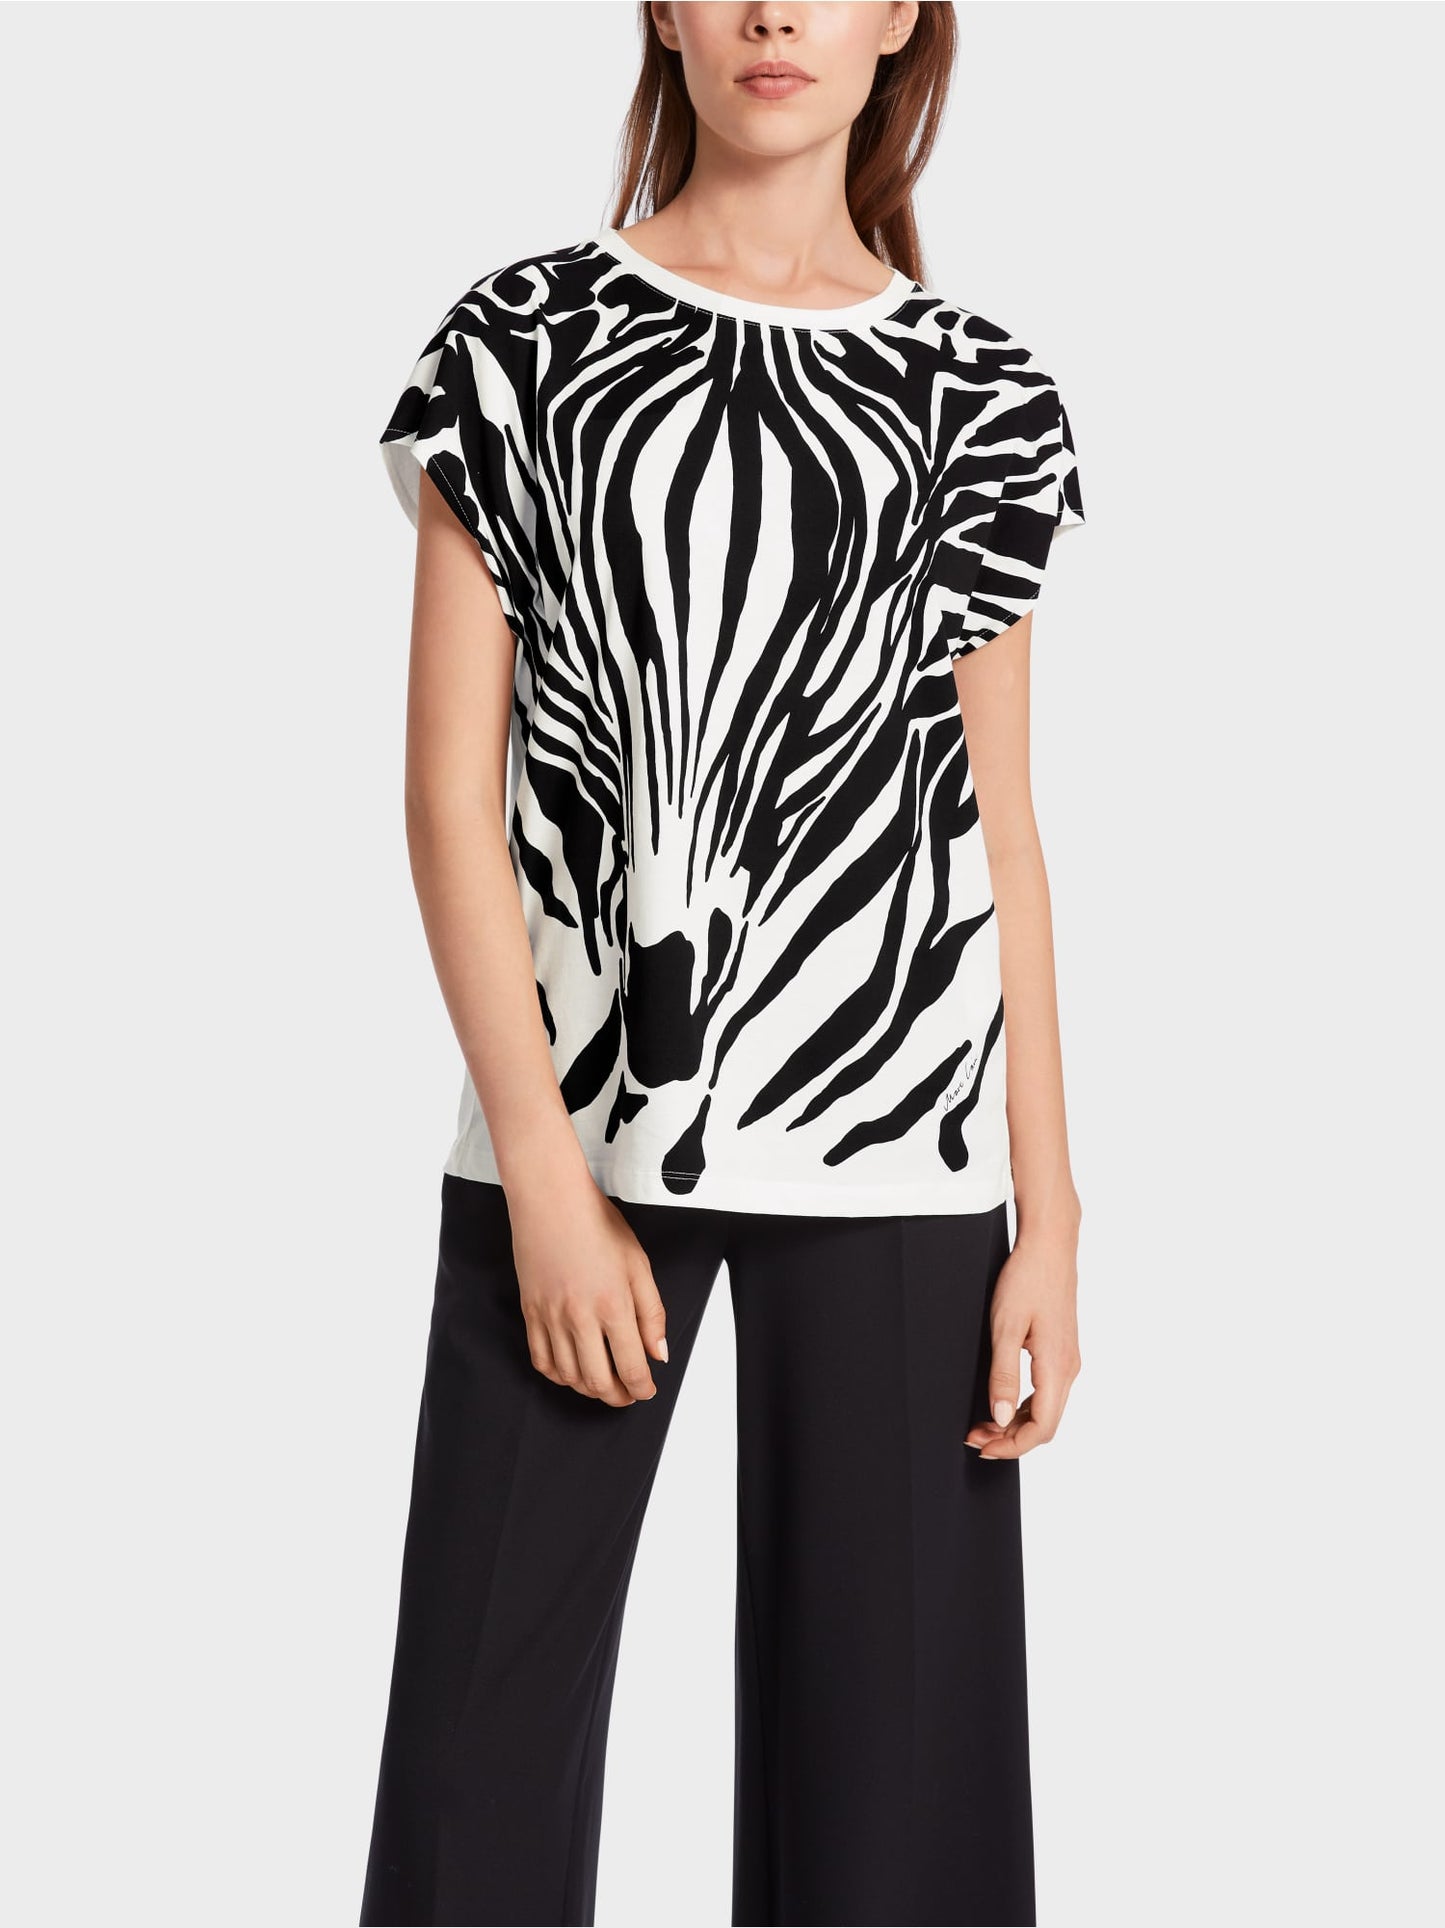 "Rethink Together" T-shirt in zebra look